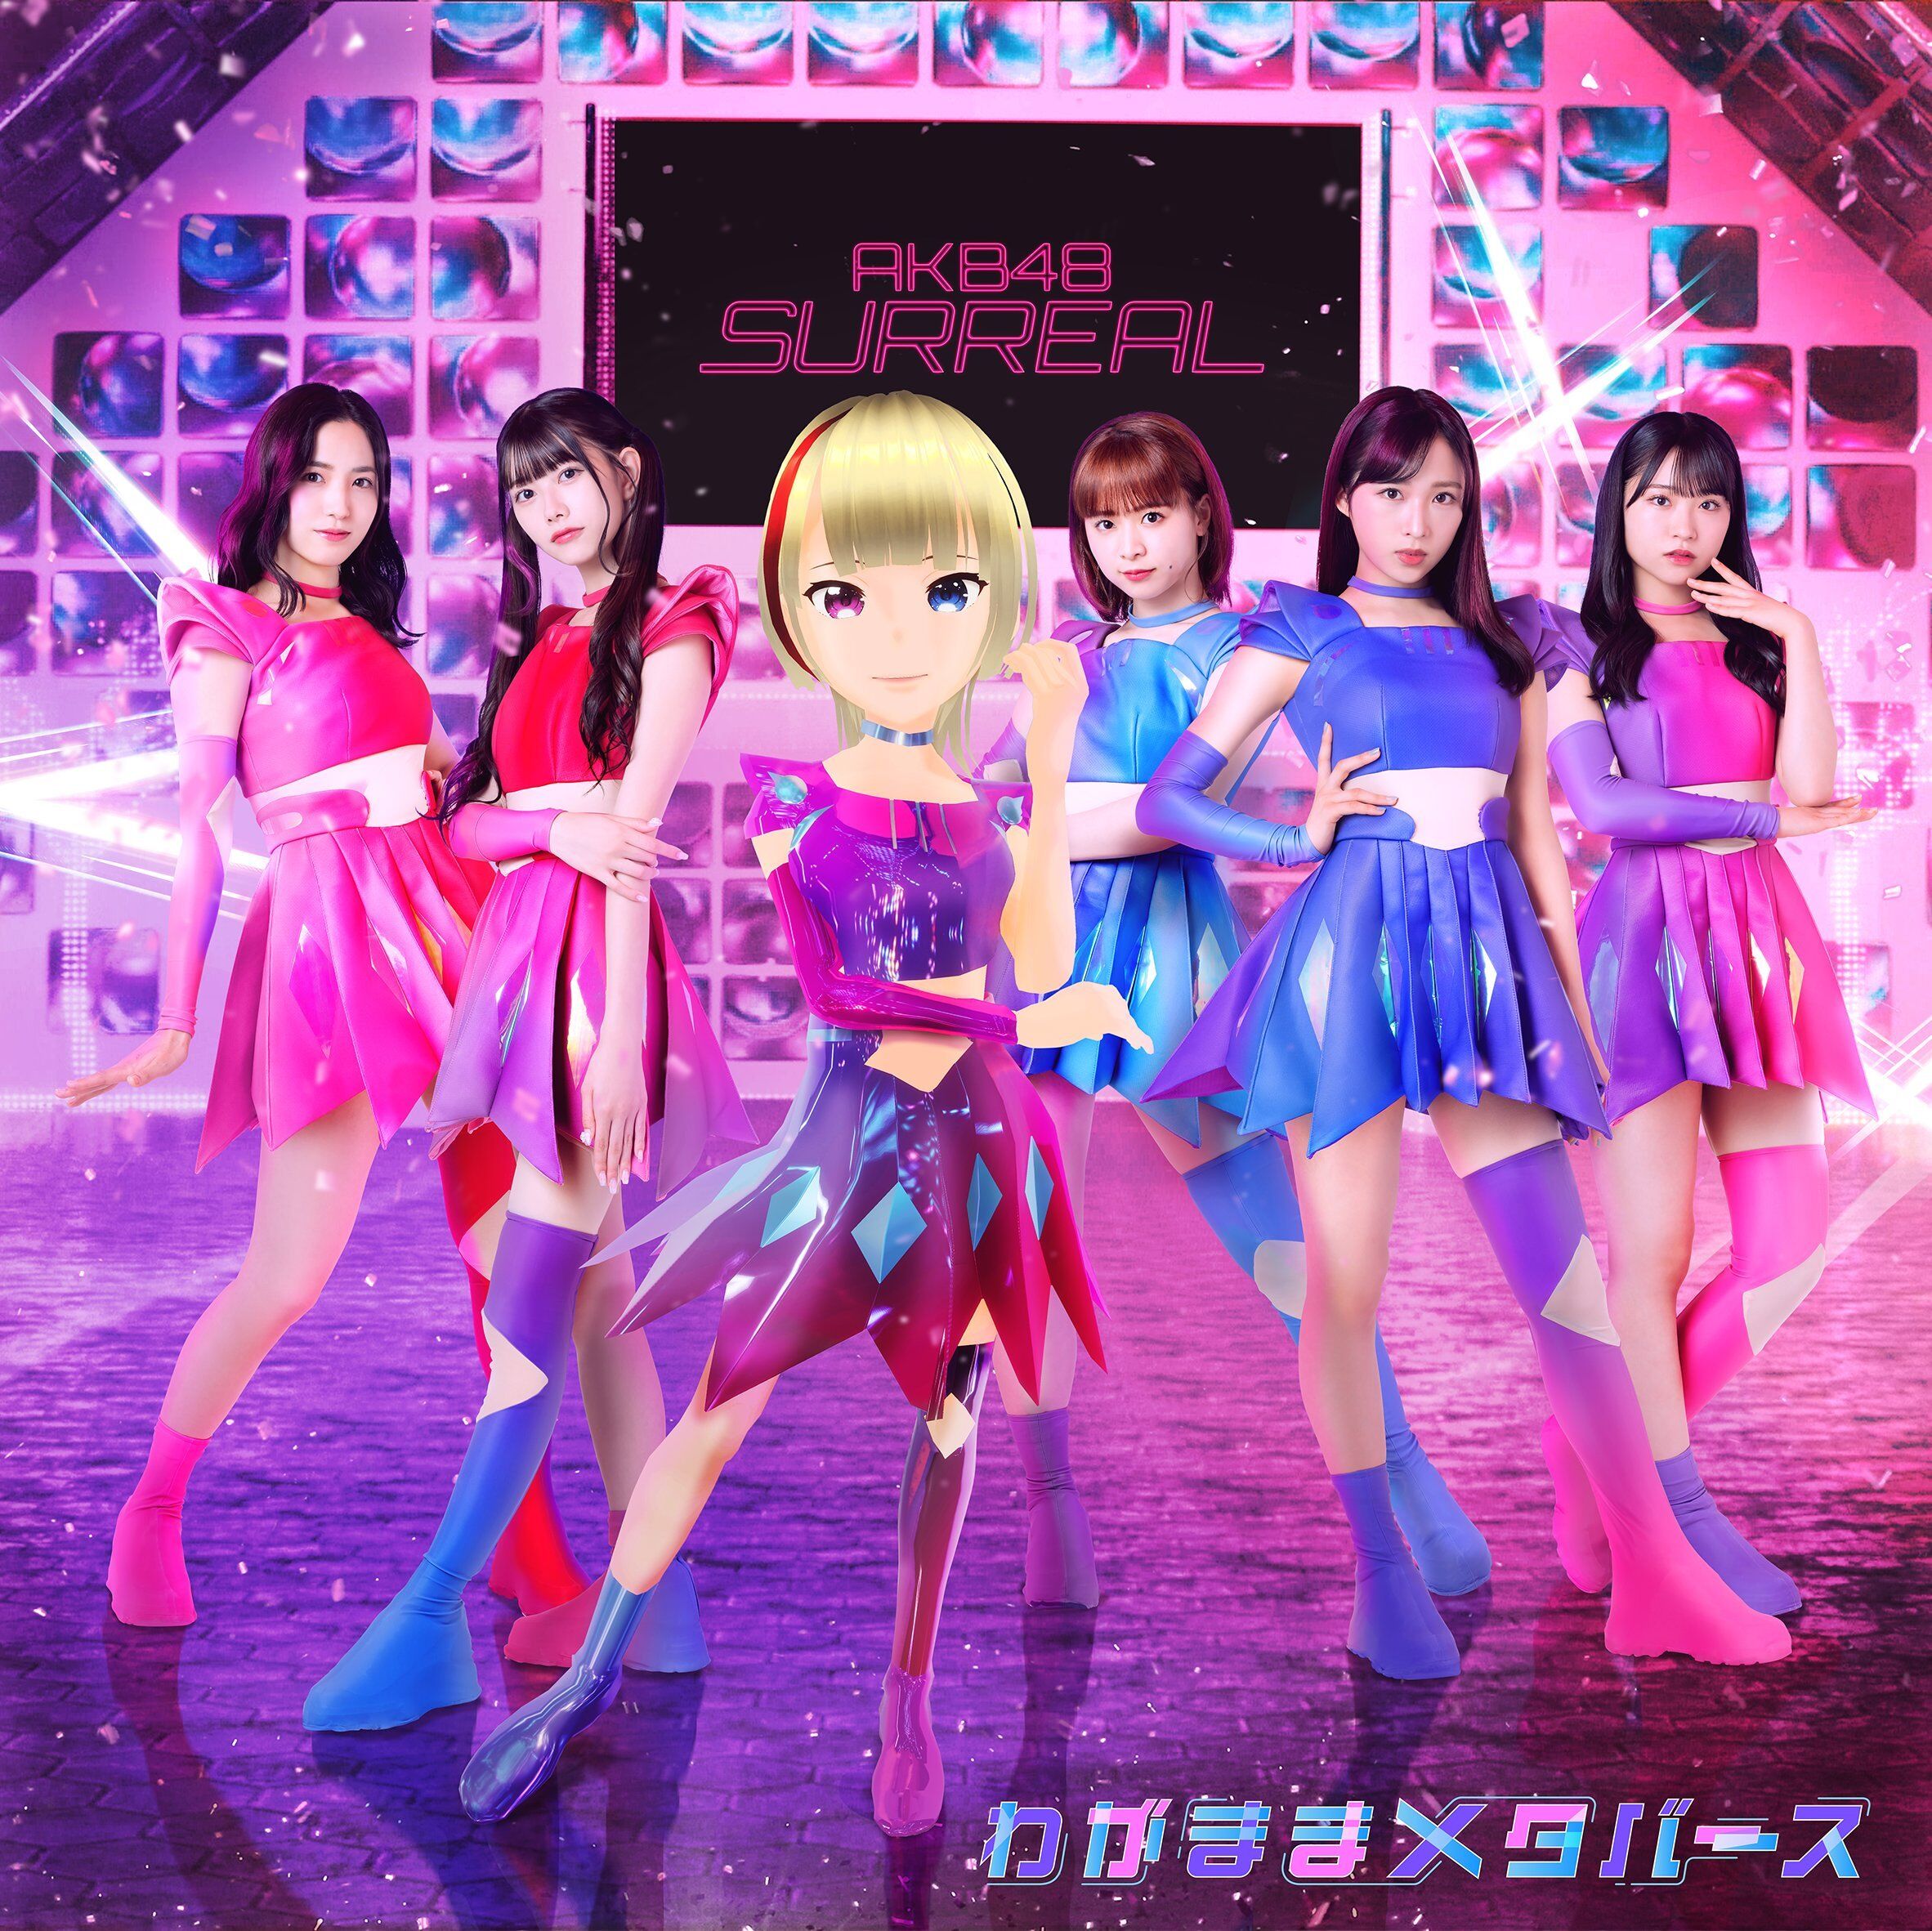 AKB48 SURREAL | AKB48 Wiki | Fandom